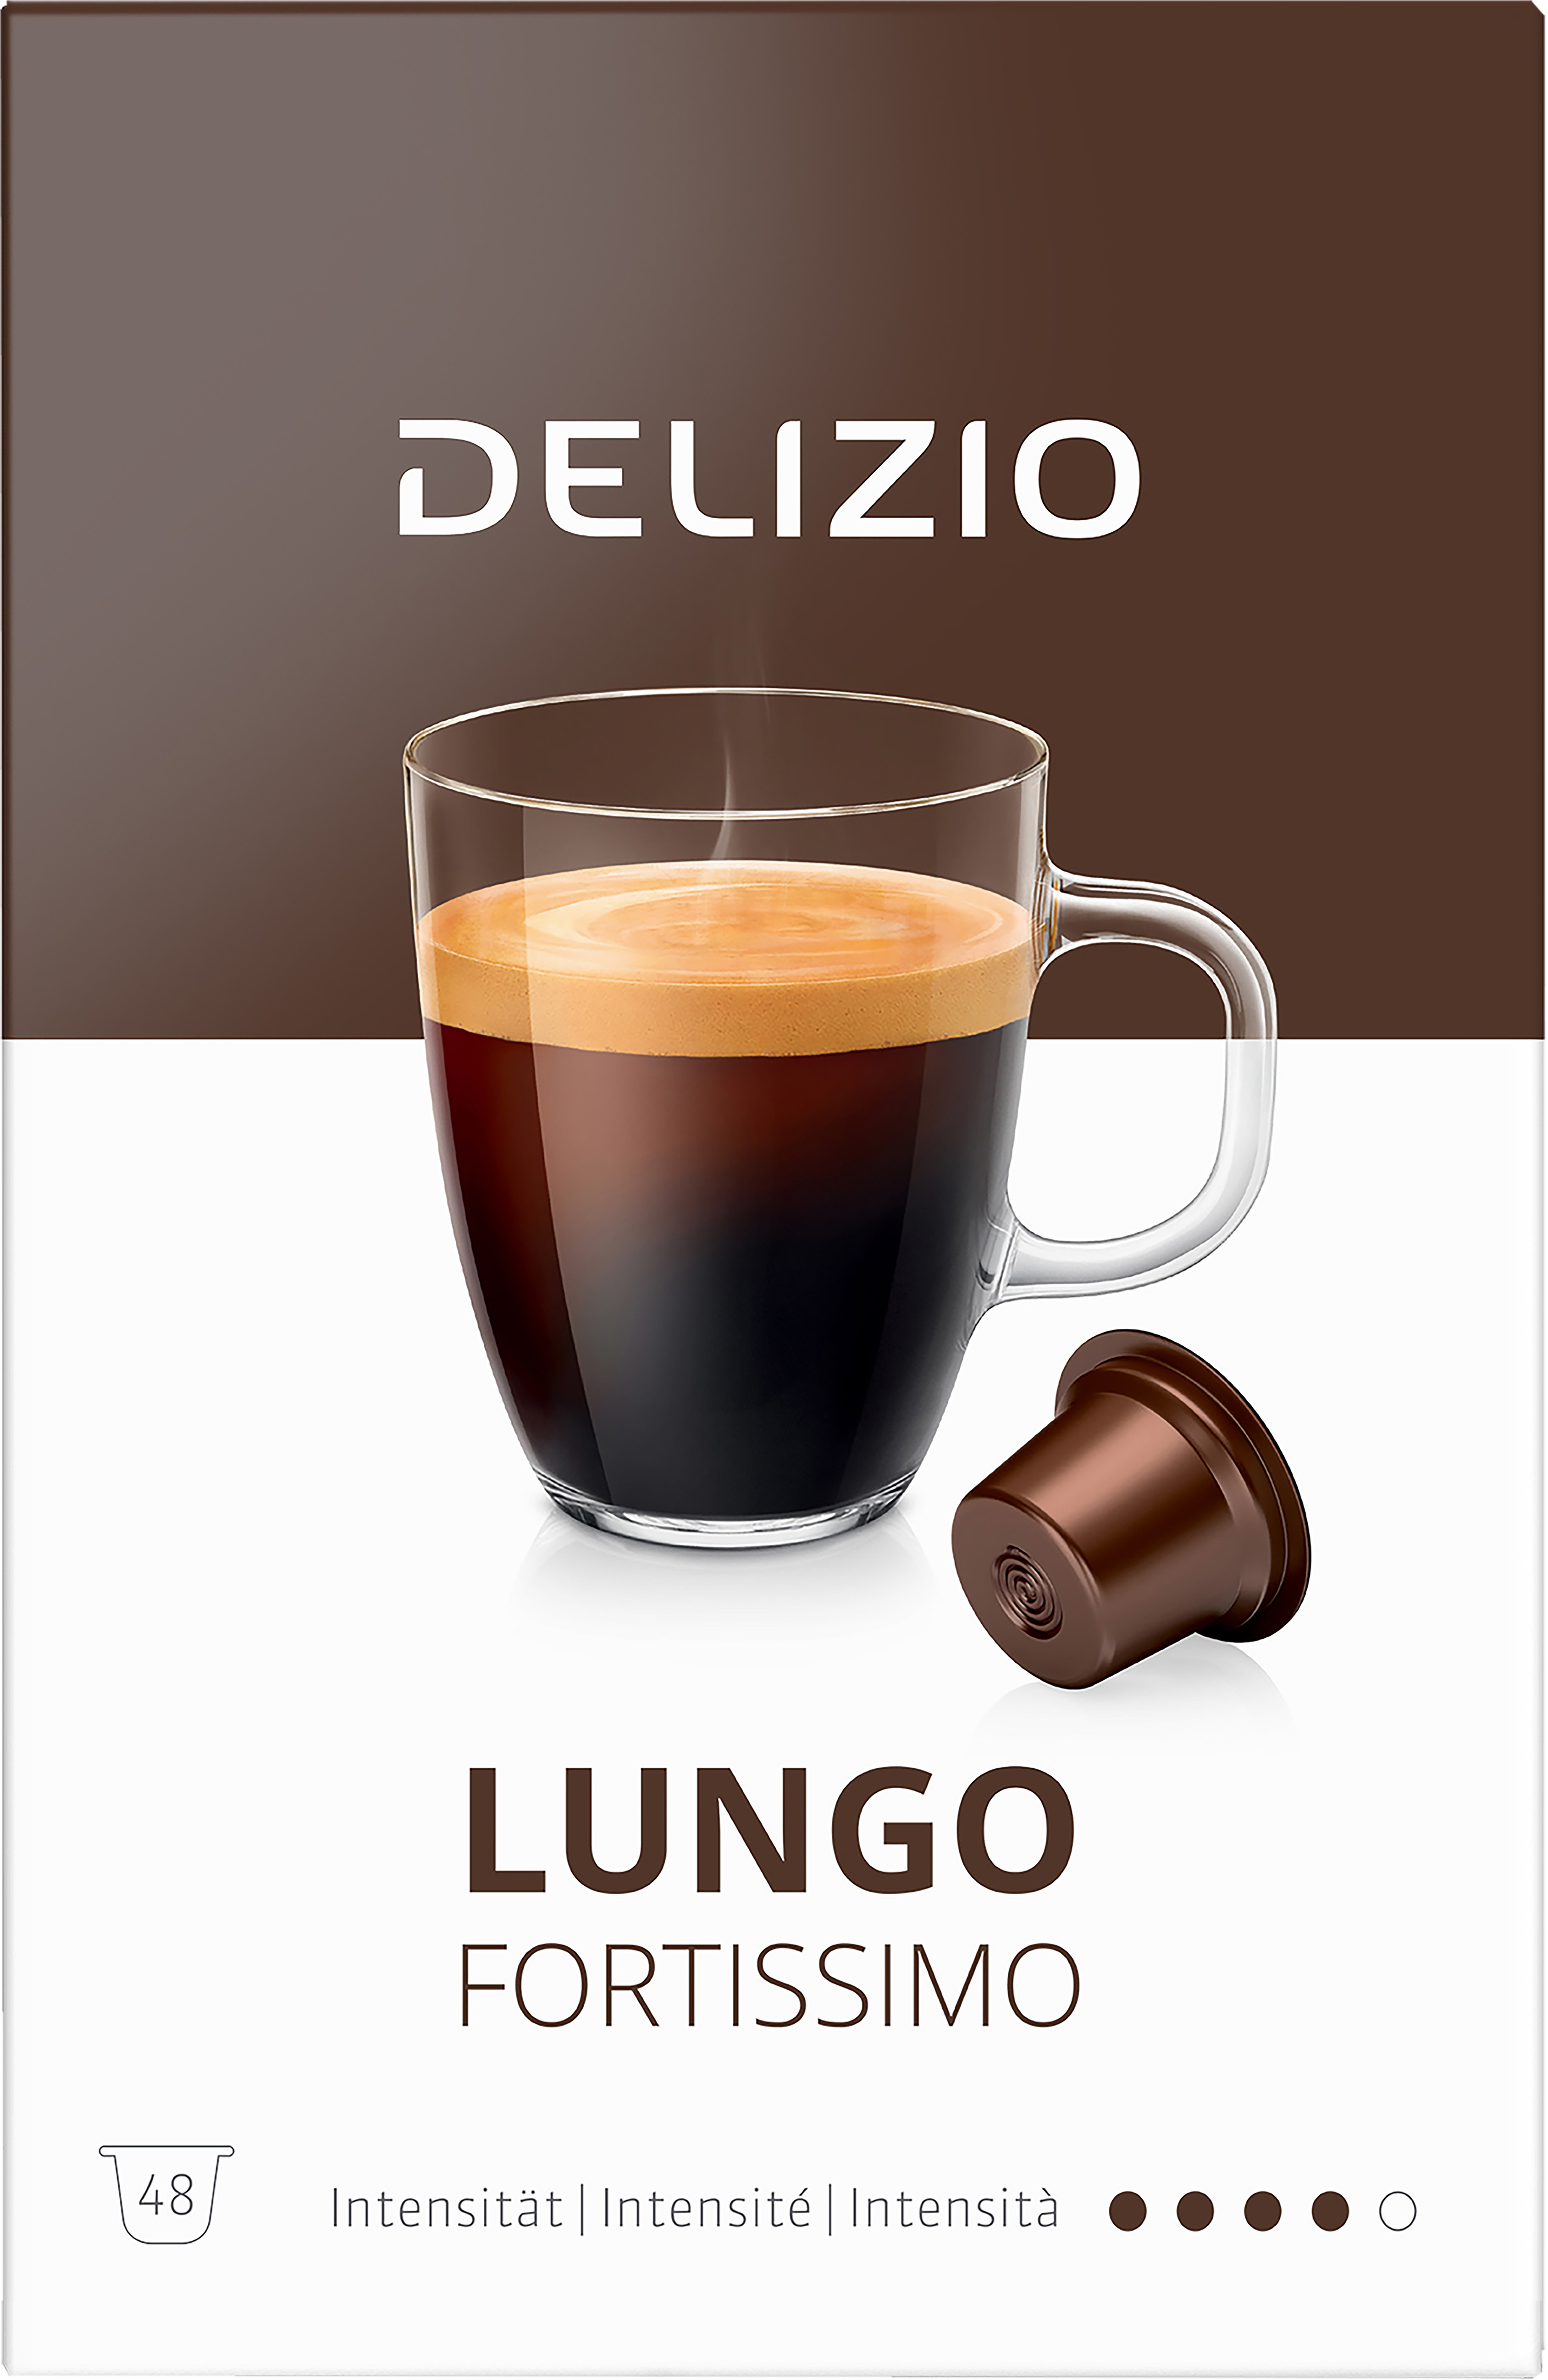 DELIZIO Capsules de café 10170342 Lungo Fortissimo 48 pcs.